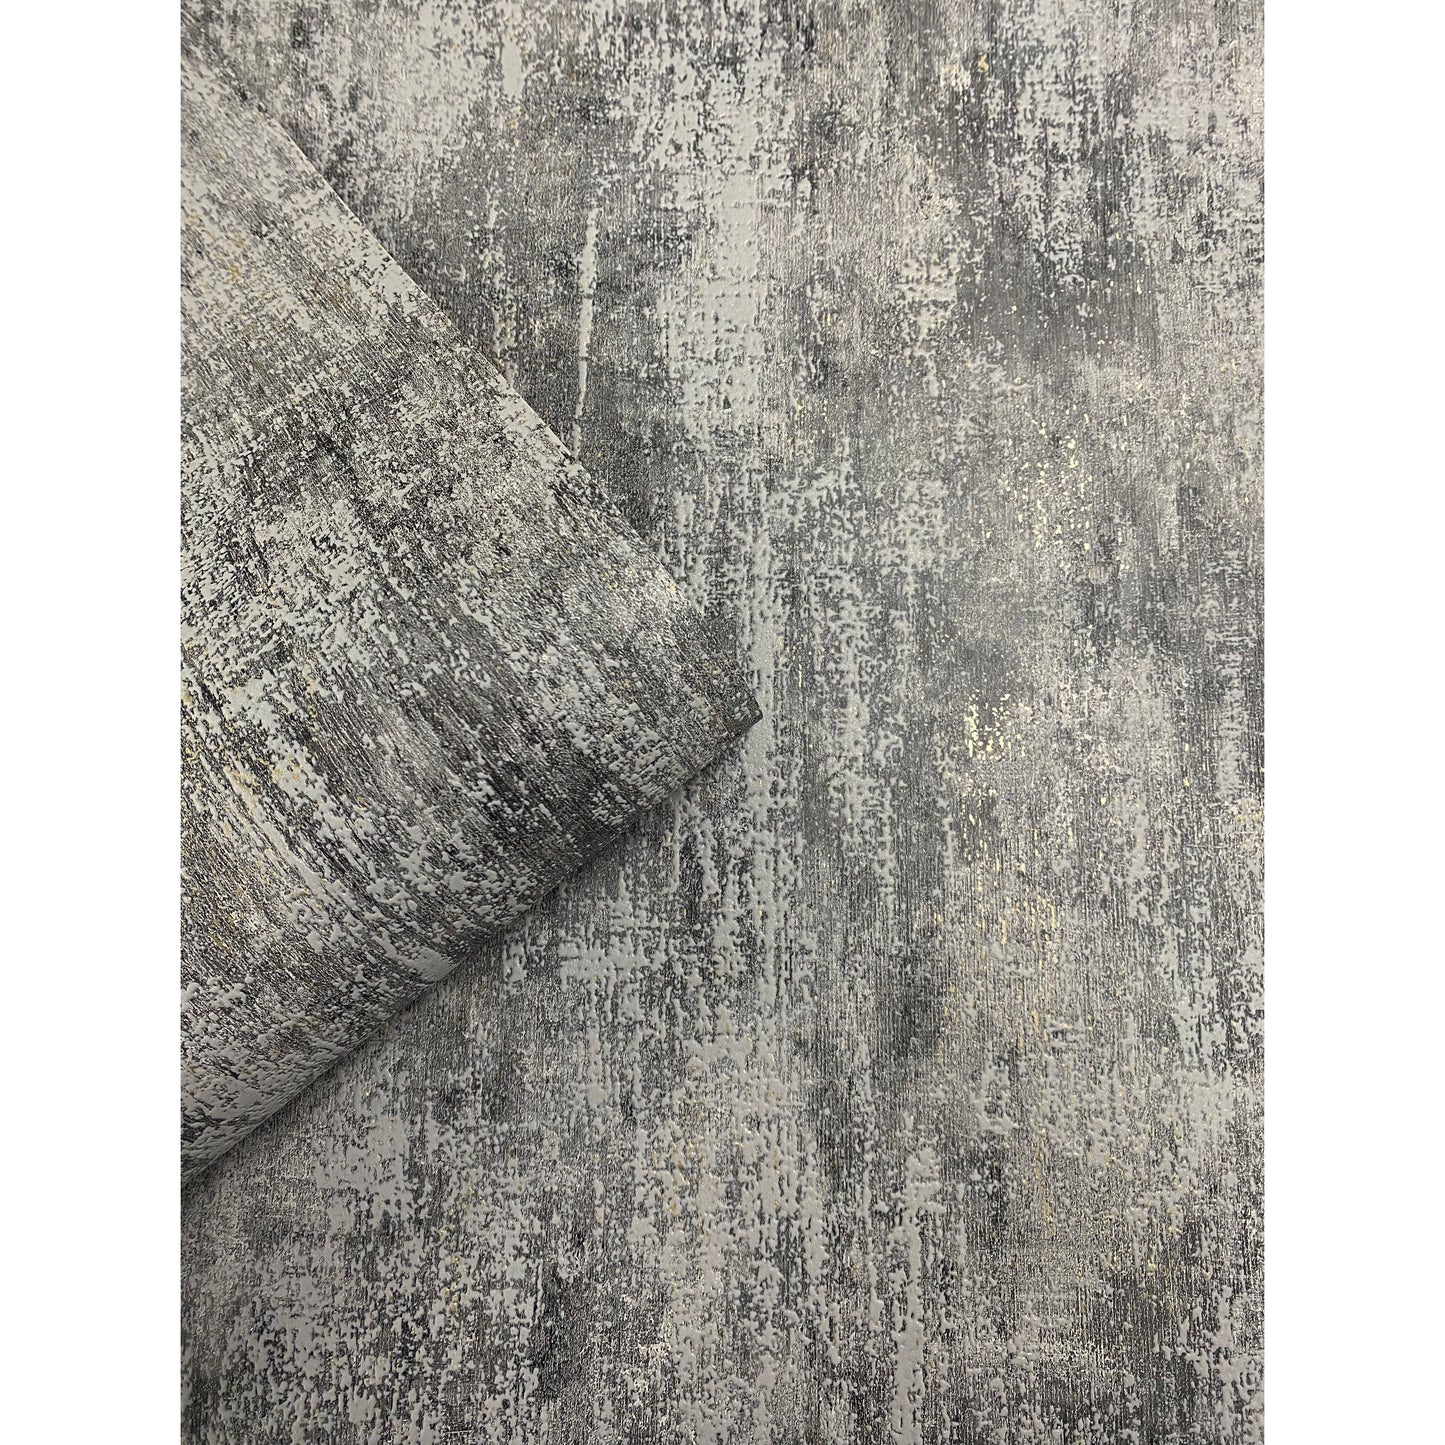 Muriva Phelan Texture Charcoal Wallpaper (209103)